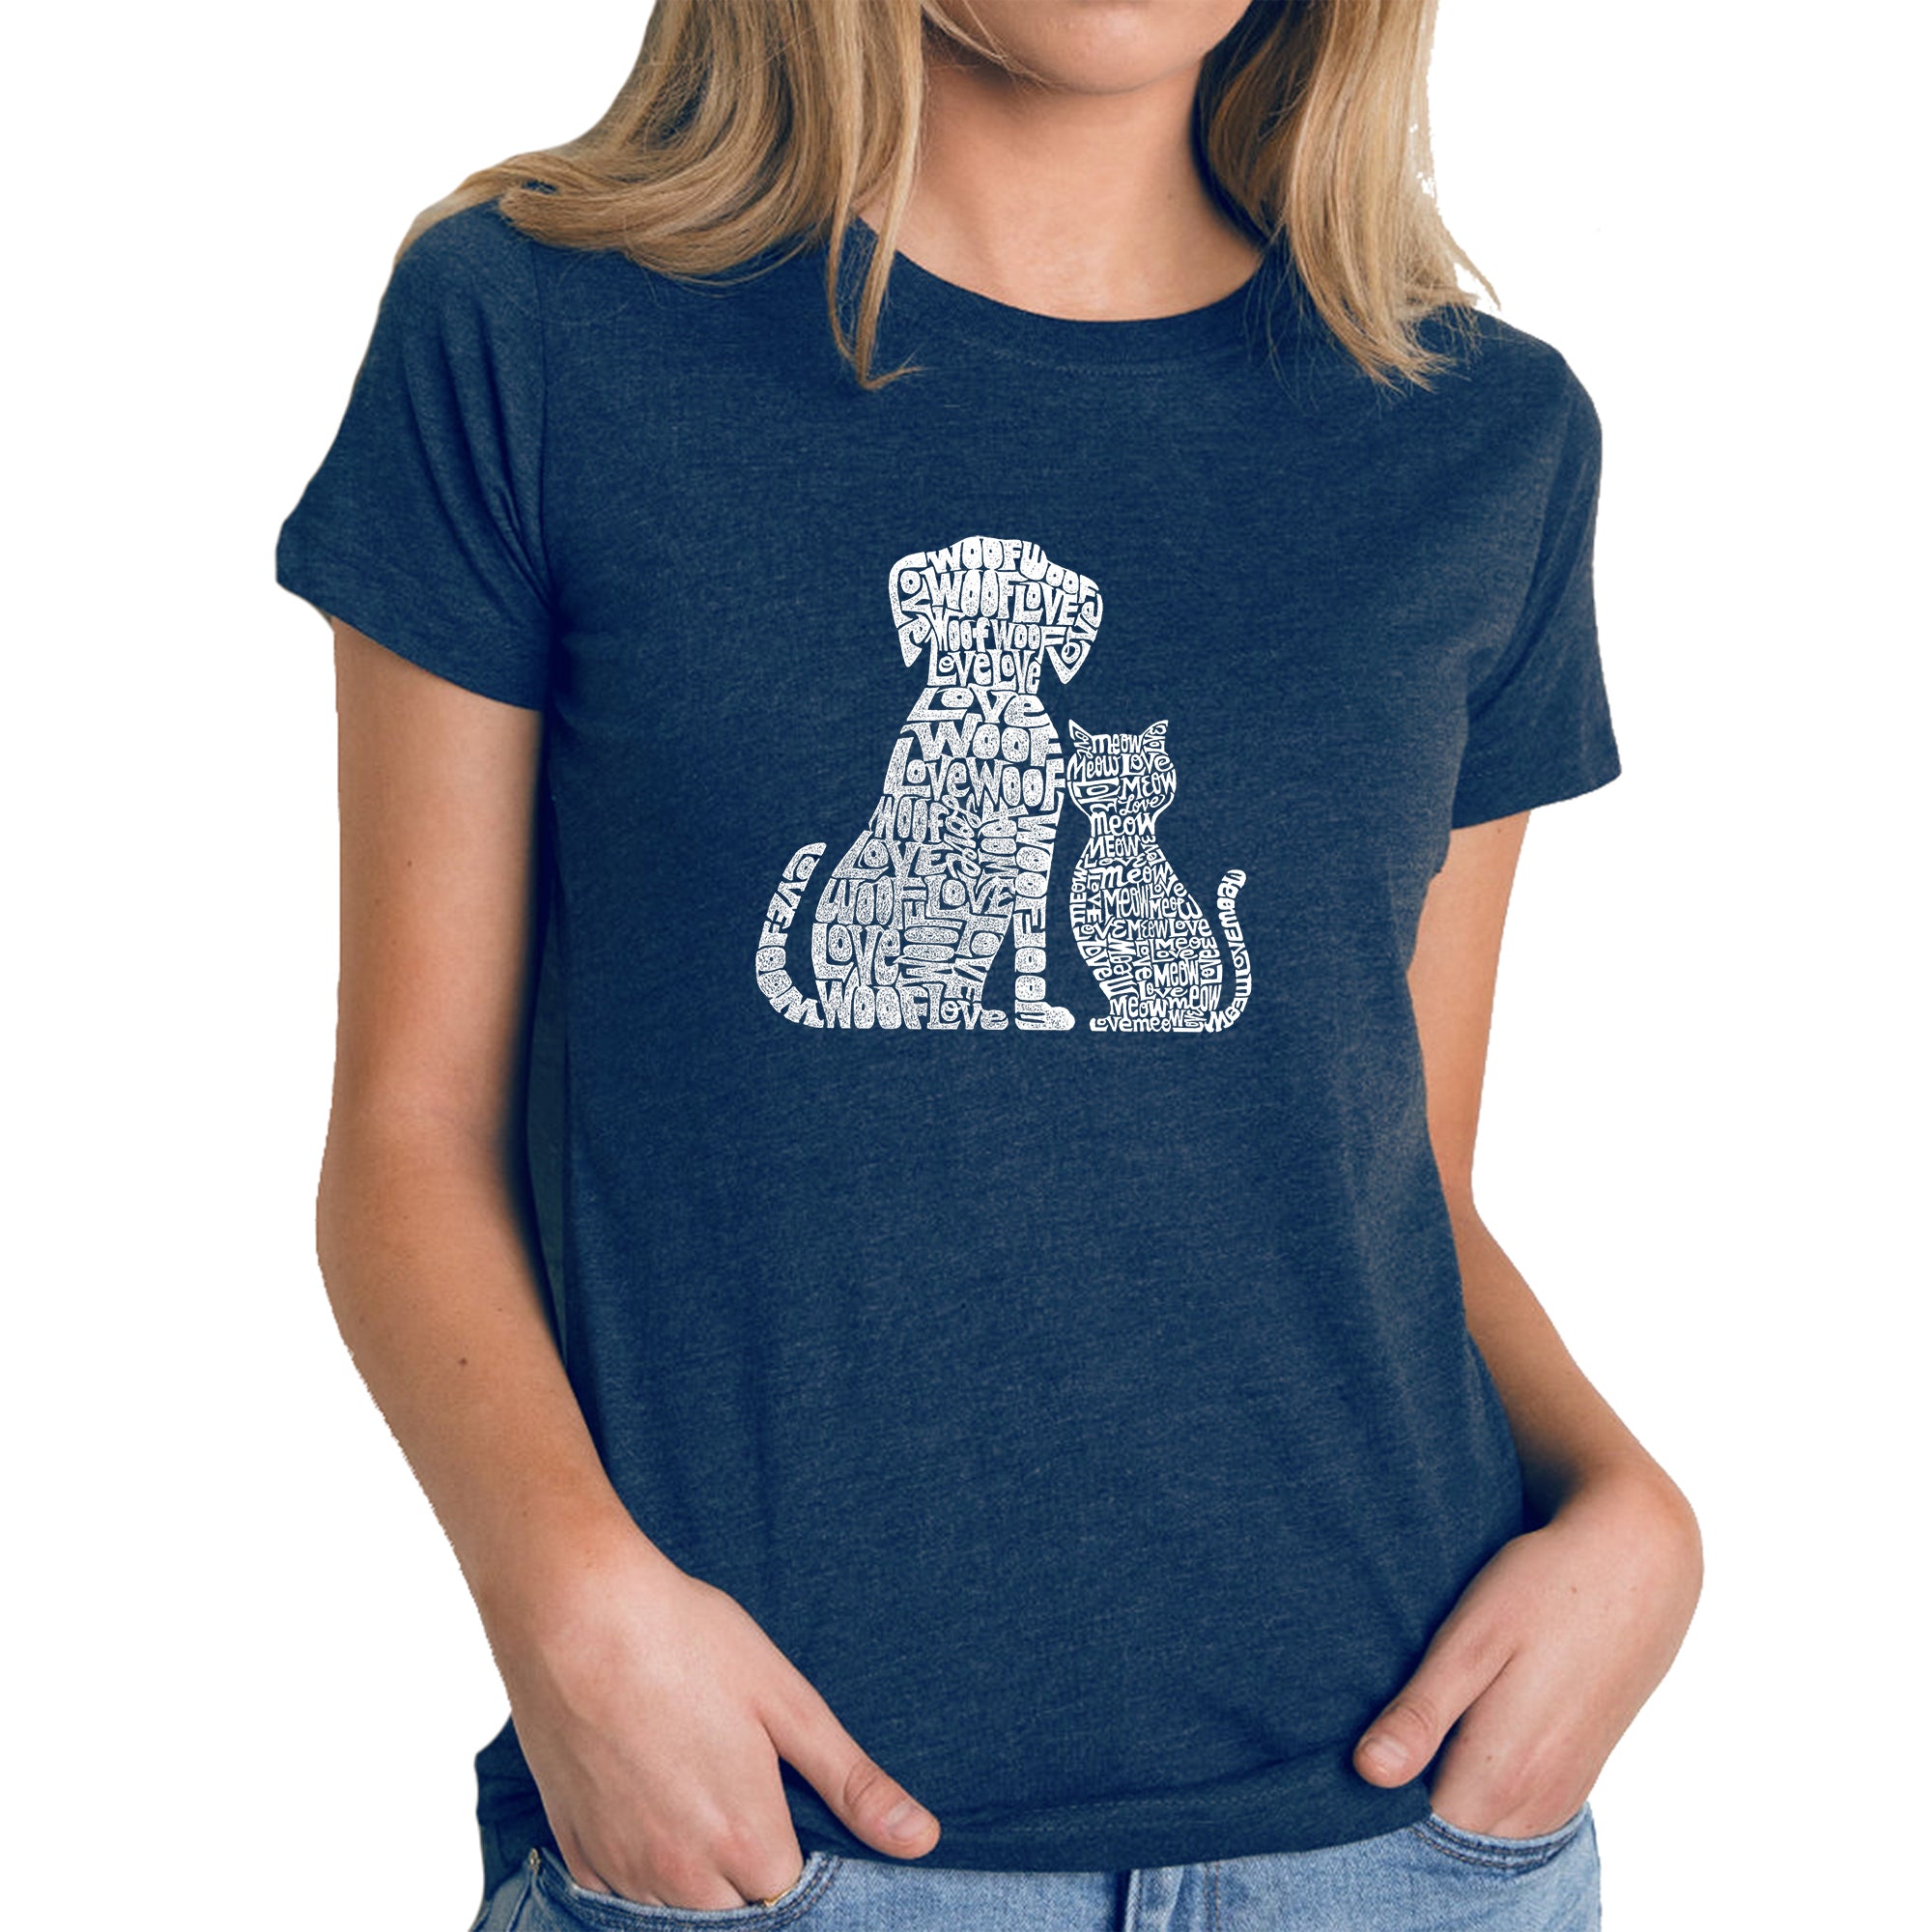 Dogs And Cats - Women's Premium Blend Word Art T-Shirt - Navy - XX-Large